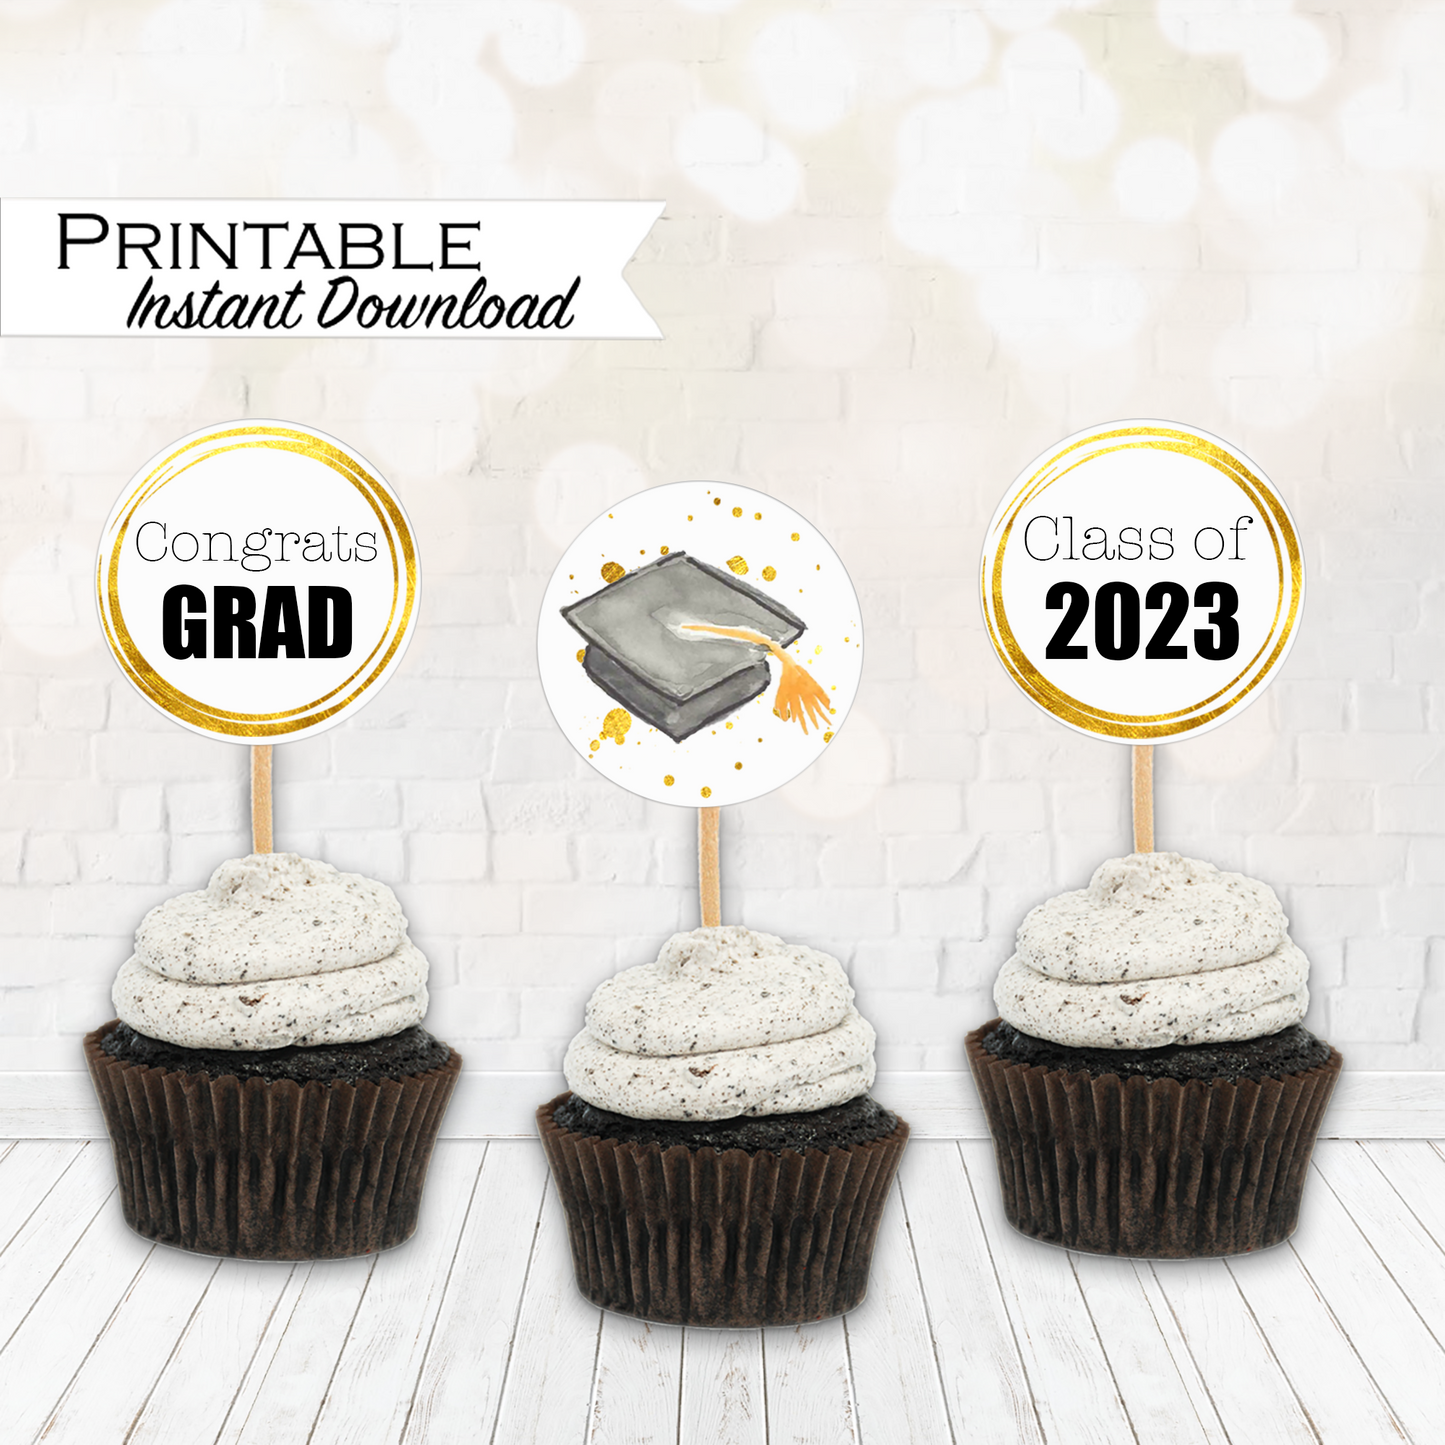 Class of 2023 Graduation Congratulations Card Printable - Digital Download